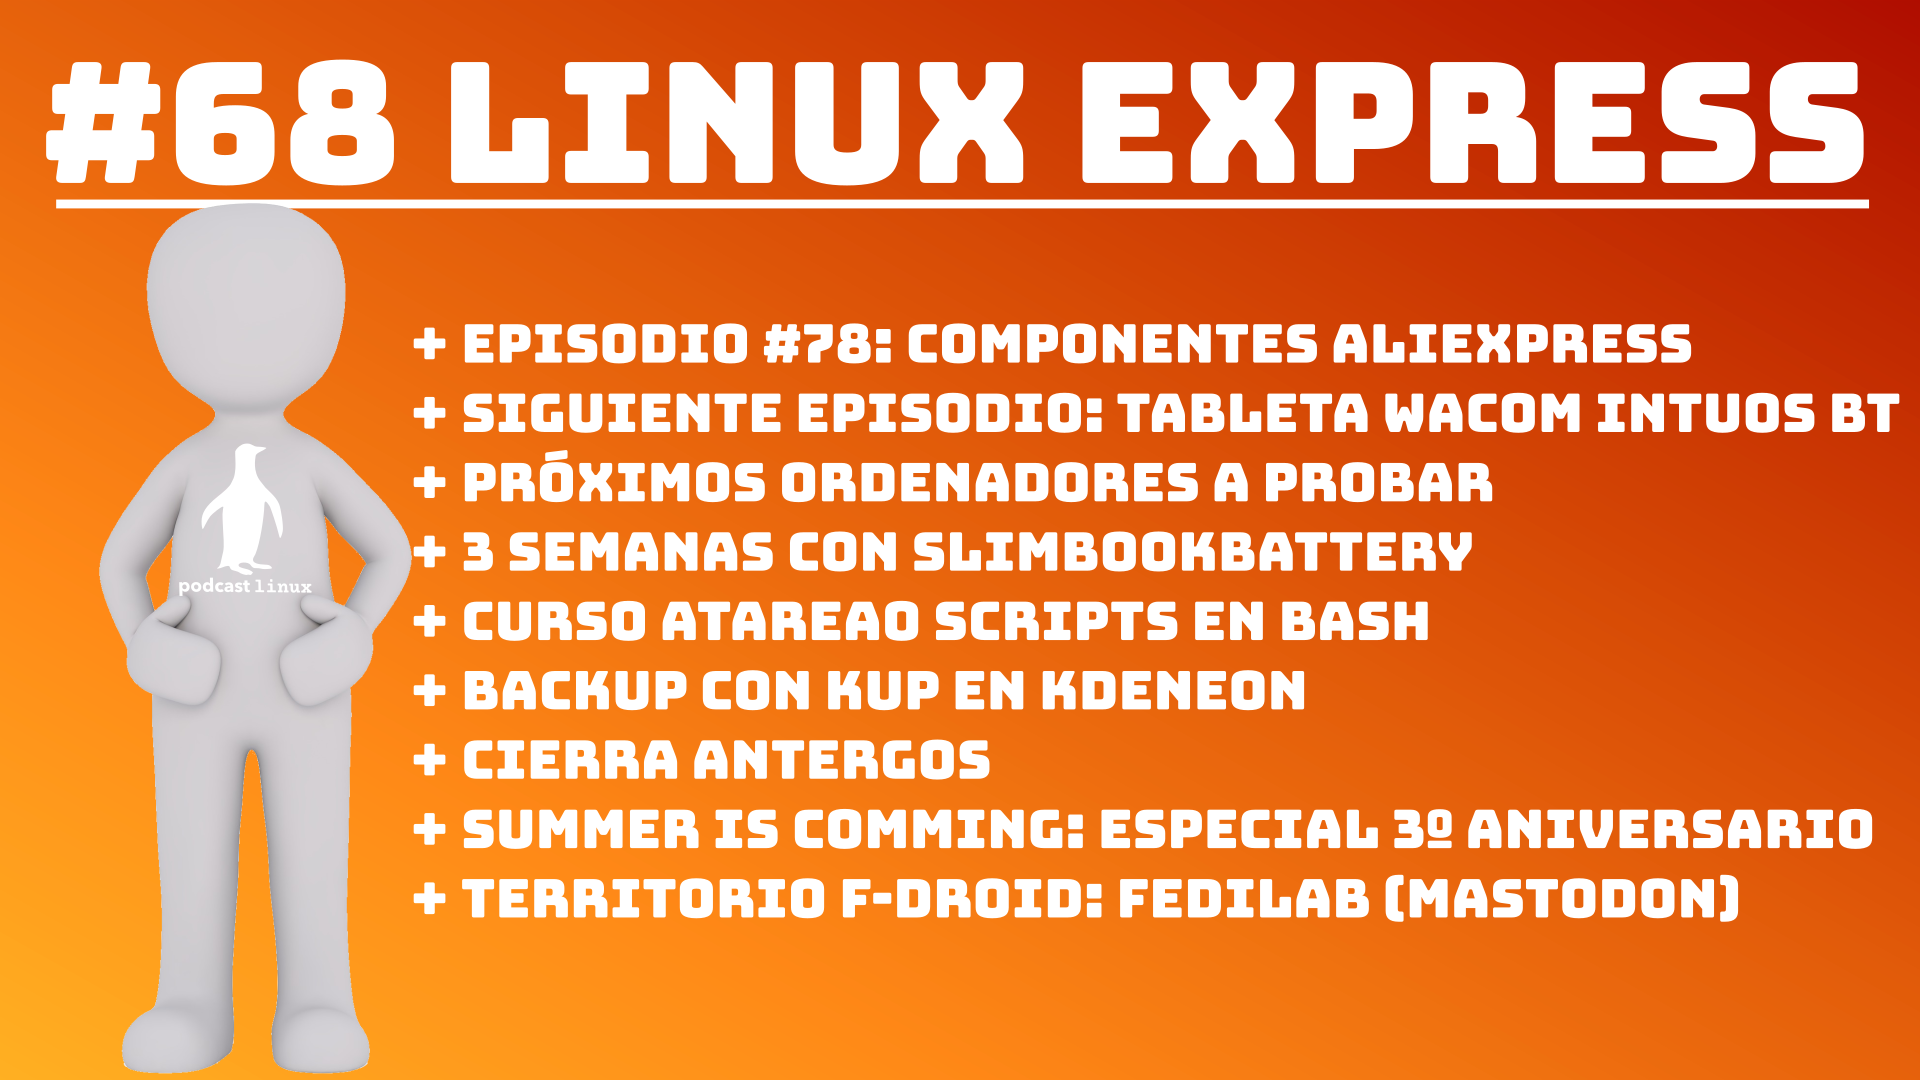 #68 Linux Express